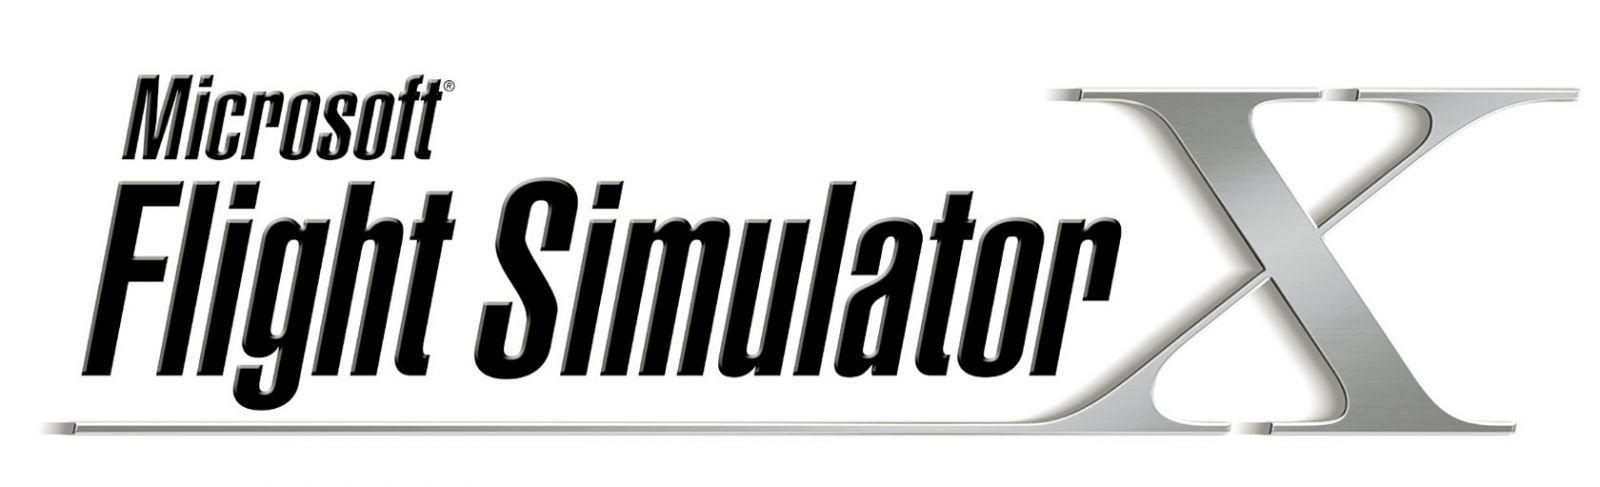 FSX Logo - The Release of Microsoft Flight Simulator X